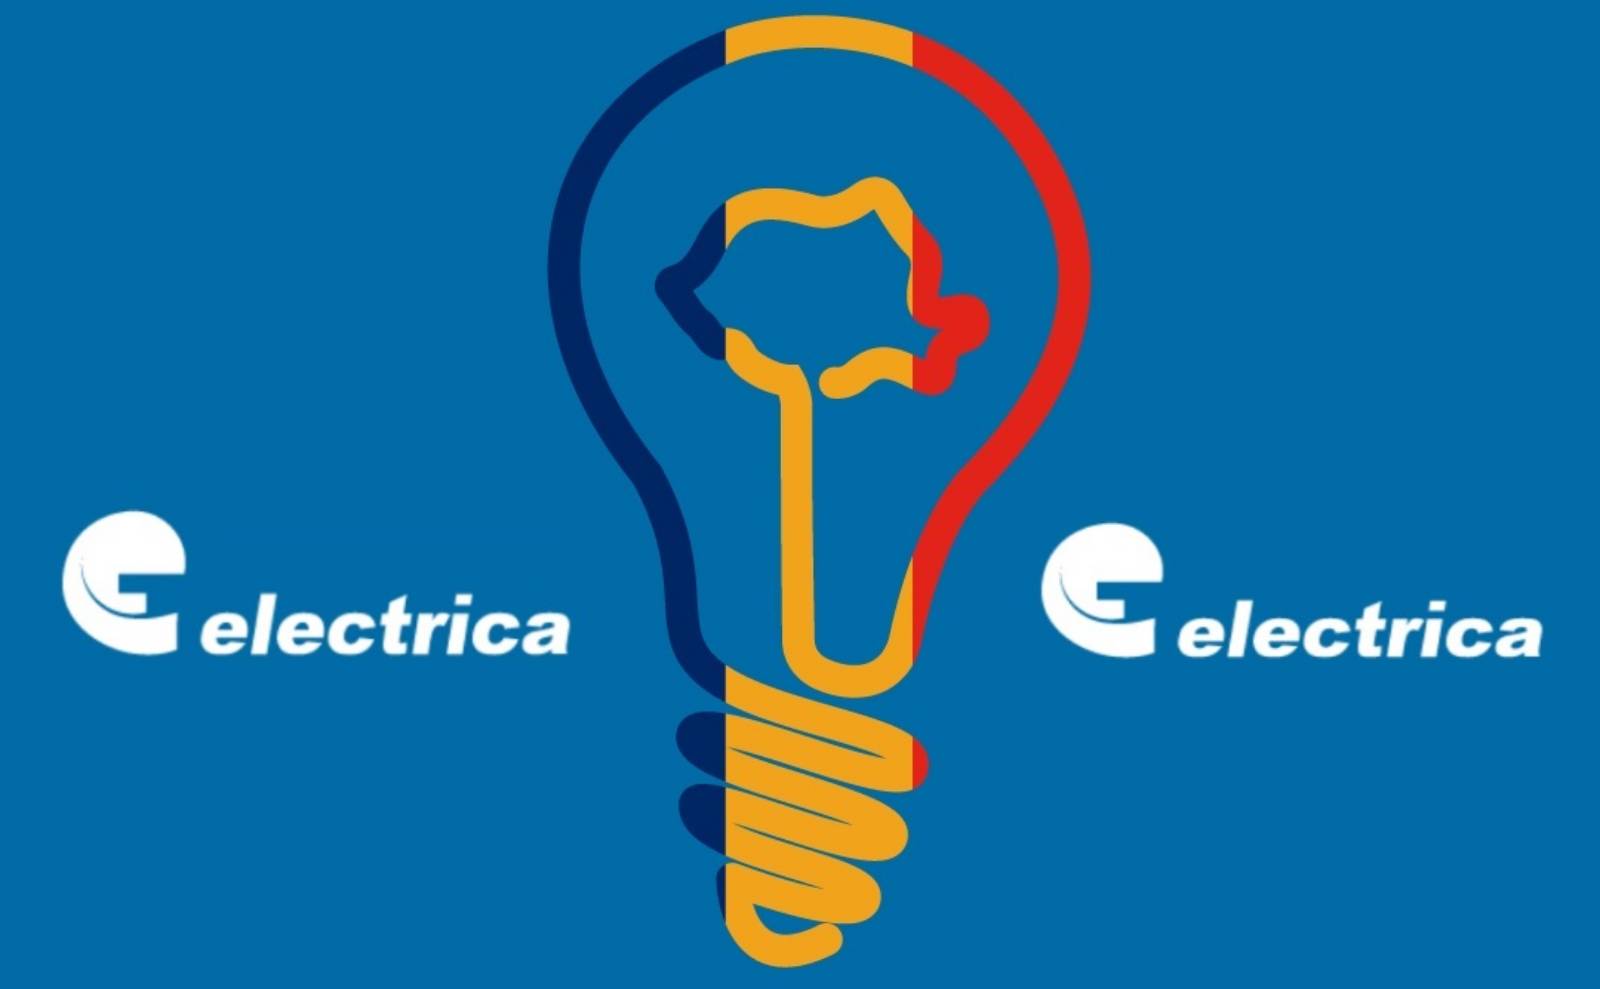 Electrica Comunicado Oficial ÚLTIMA HORA Medidas Clientes Rumanía